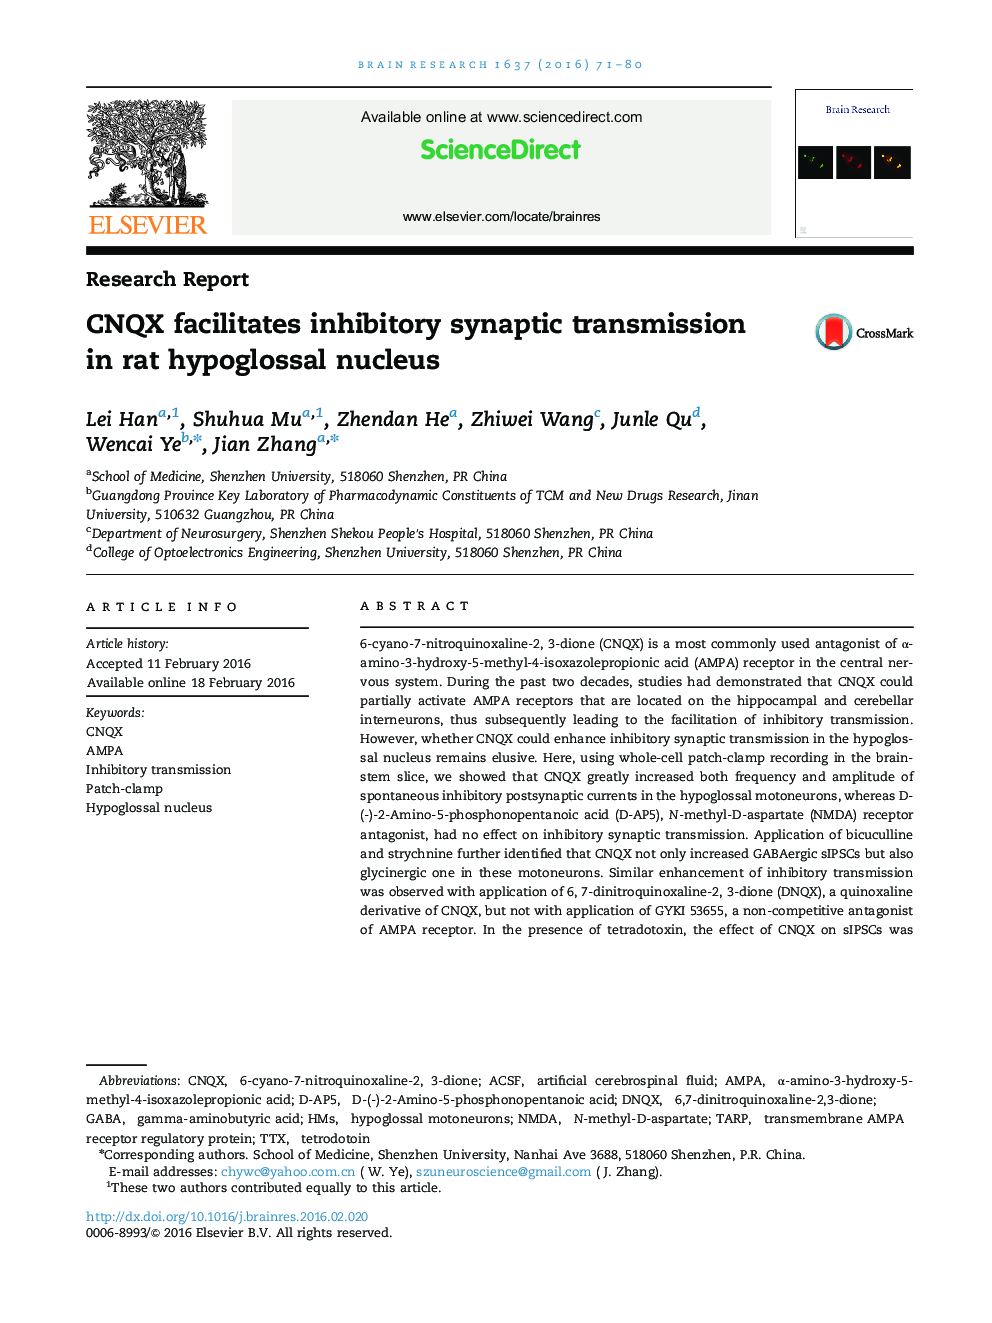 CNQX facilitates inhibitory synaptic transmission in rat hypoglossal nucleus